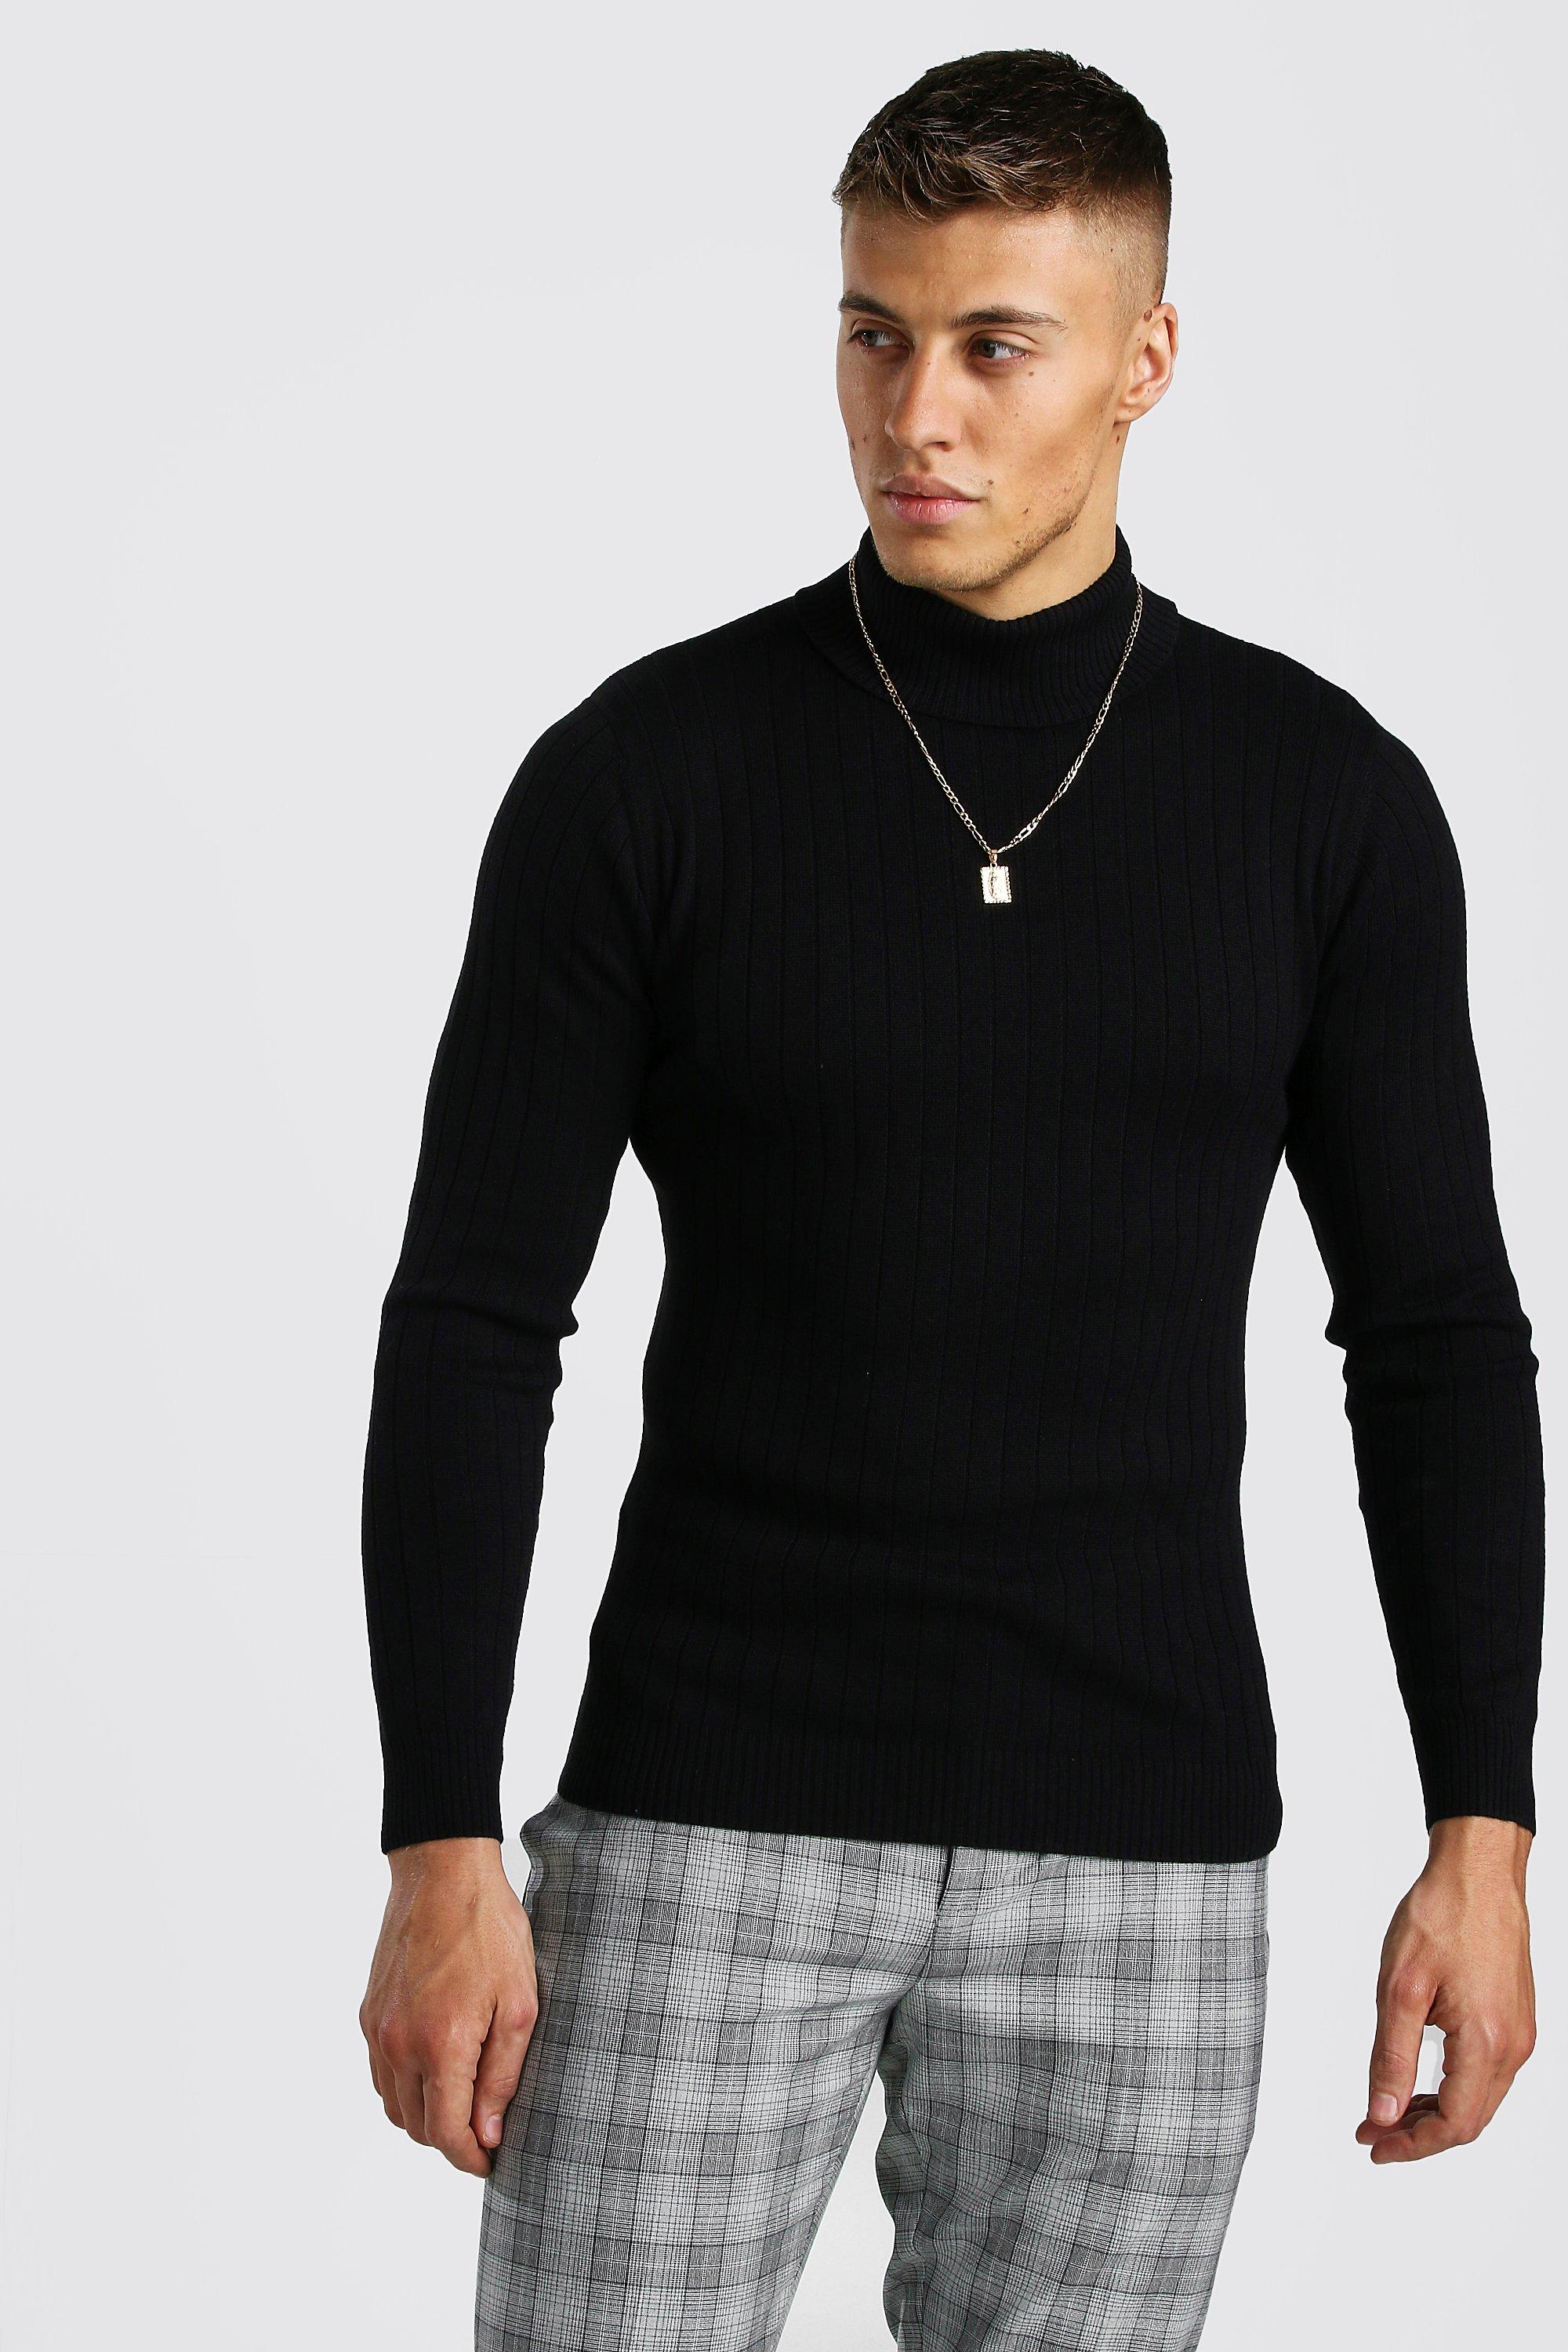 black knitted roll neck jumper